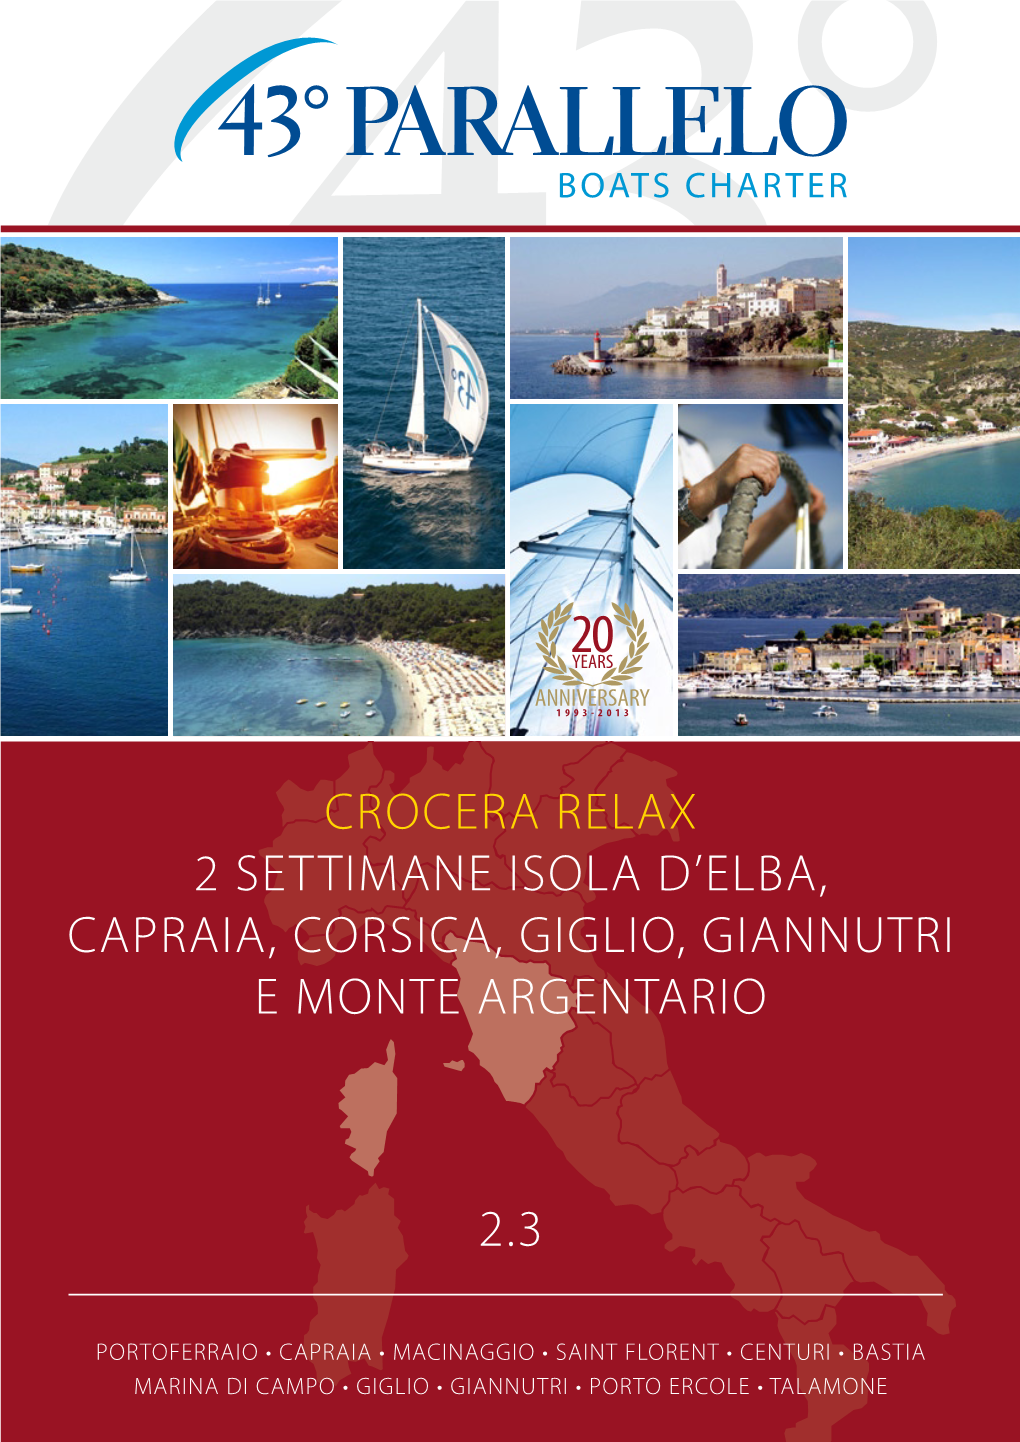 Crocera Relax 2 Settimane Isola D'elba, Capraia, Corsica, Giglio, Giannutri E Monte Argentario